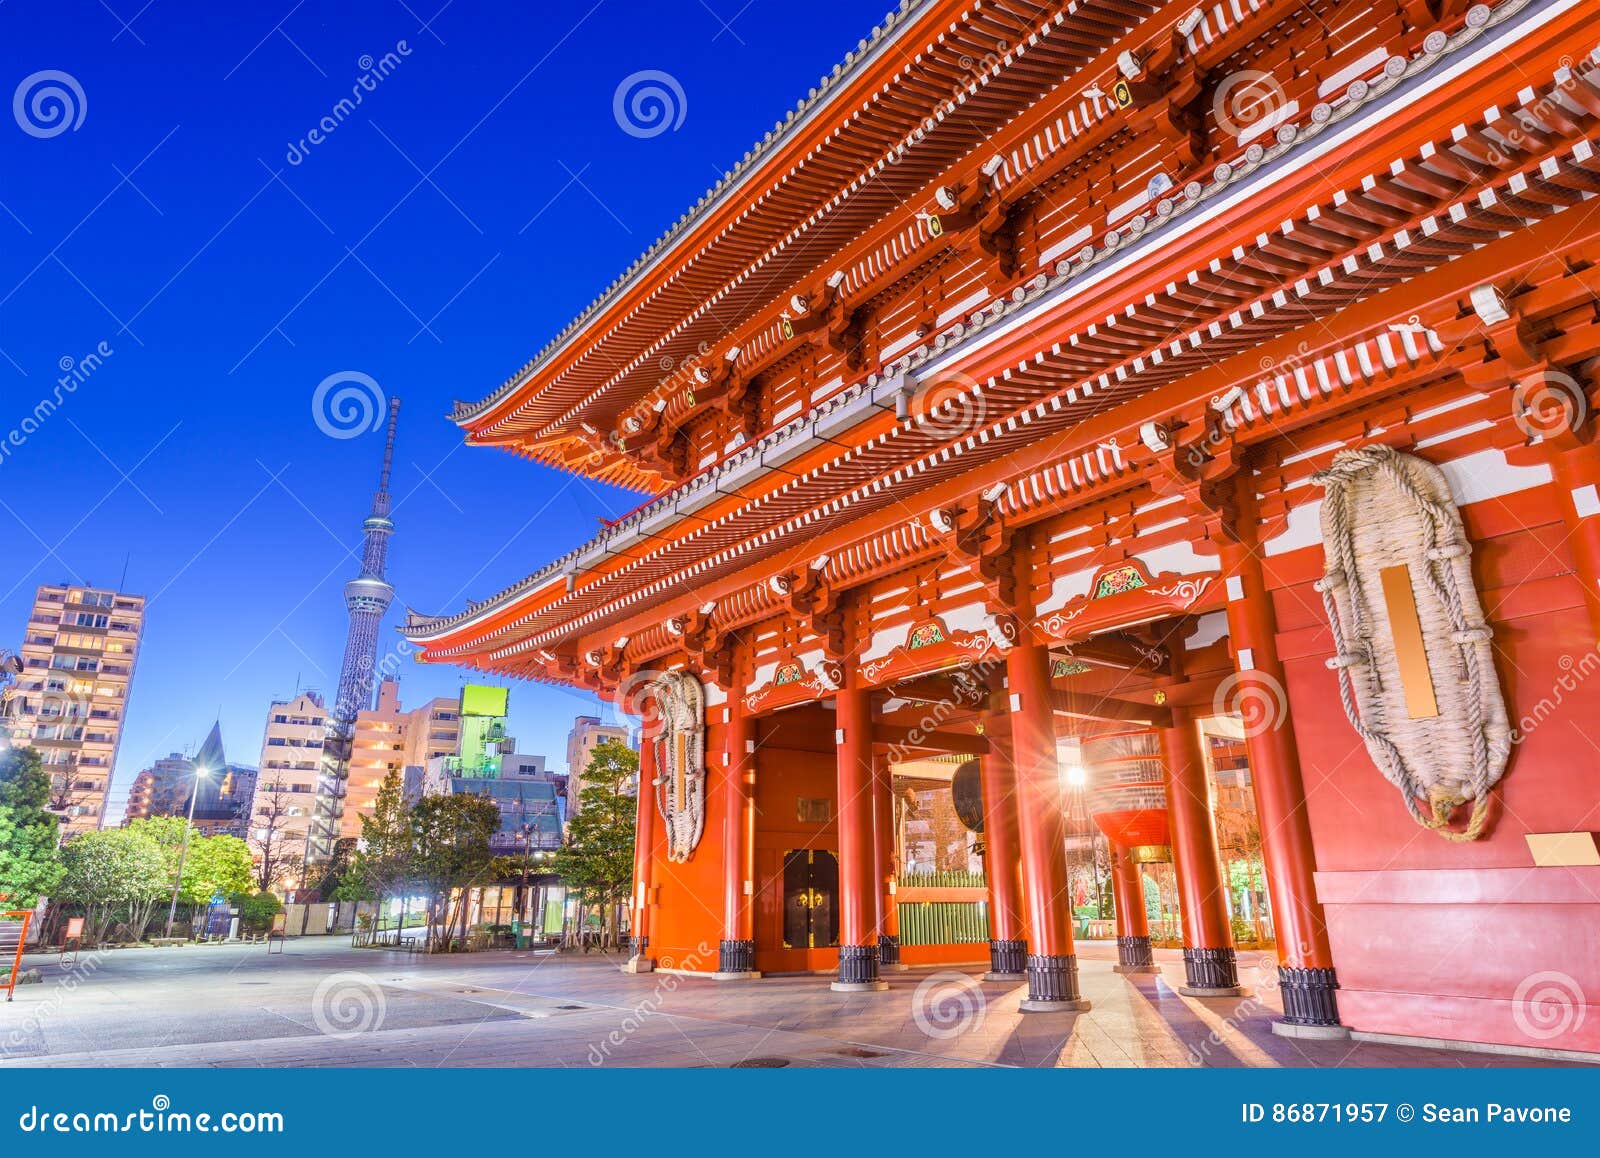 tokyo japan temple